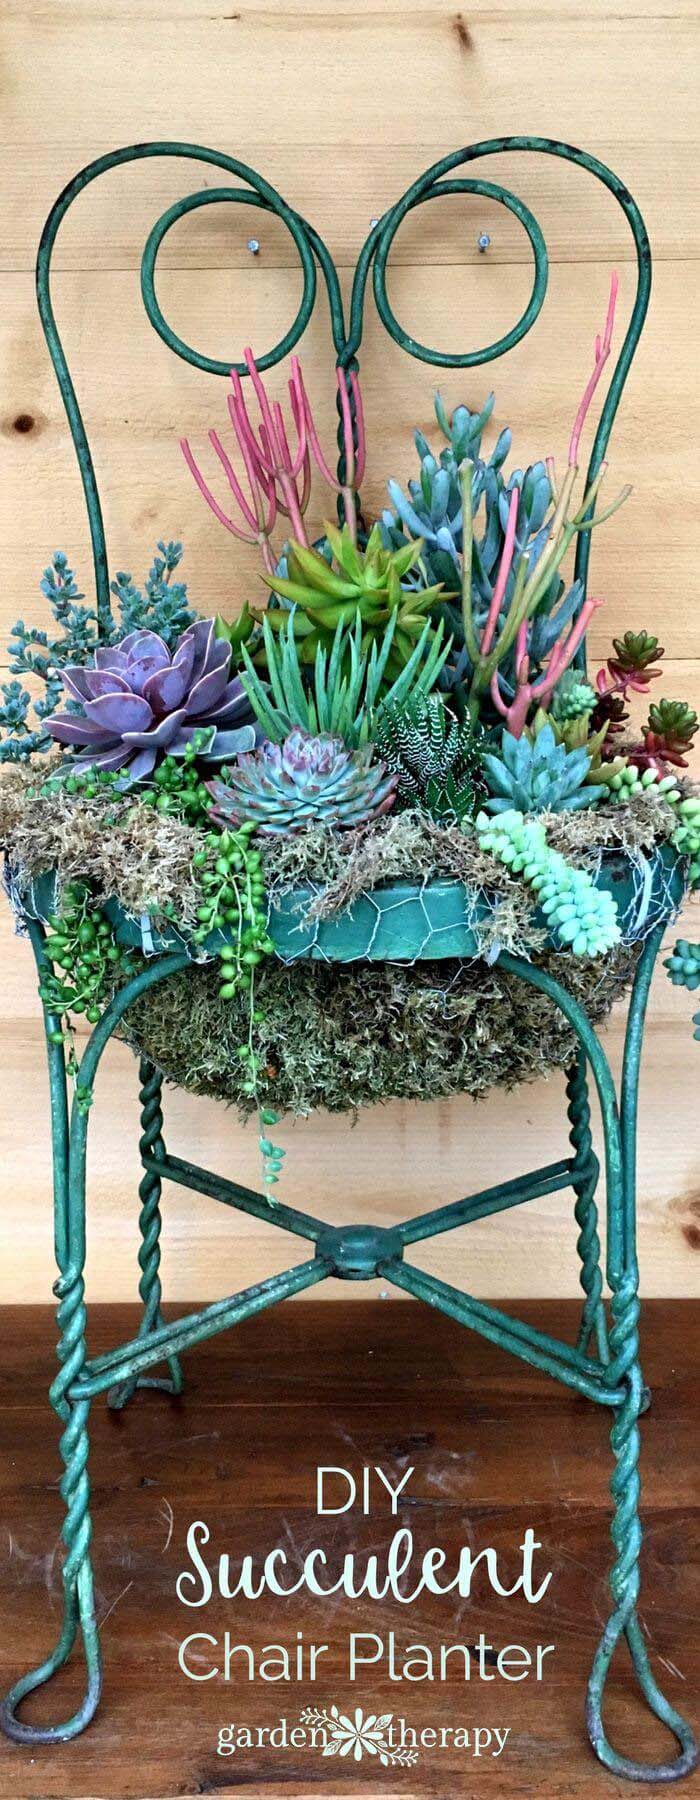 DIY Succulent Chair Planter #chair #diy #repurposed #decorhomeideas